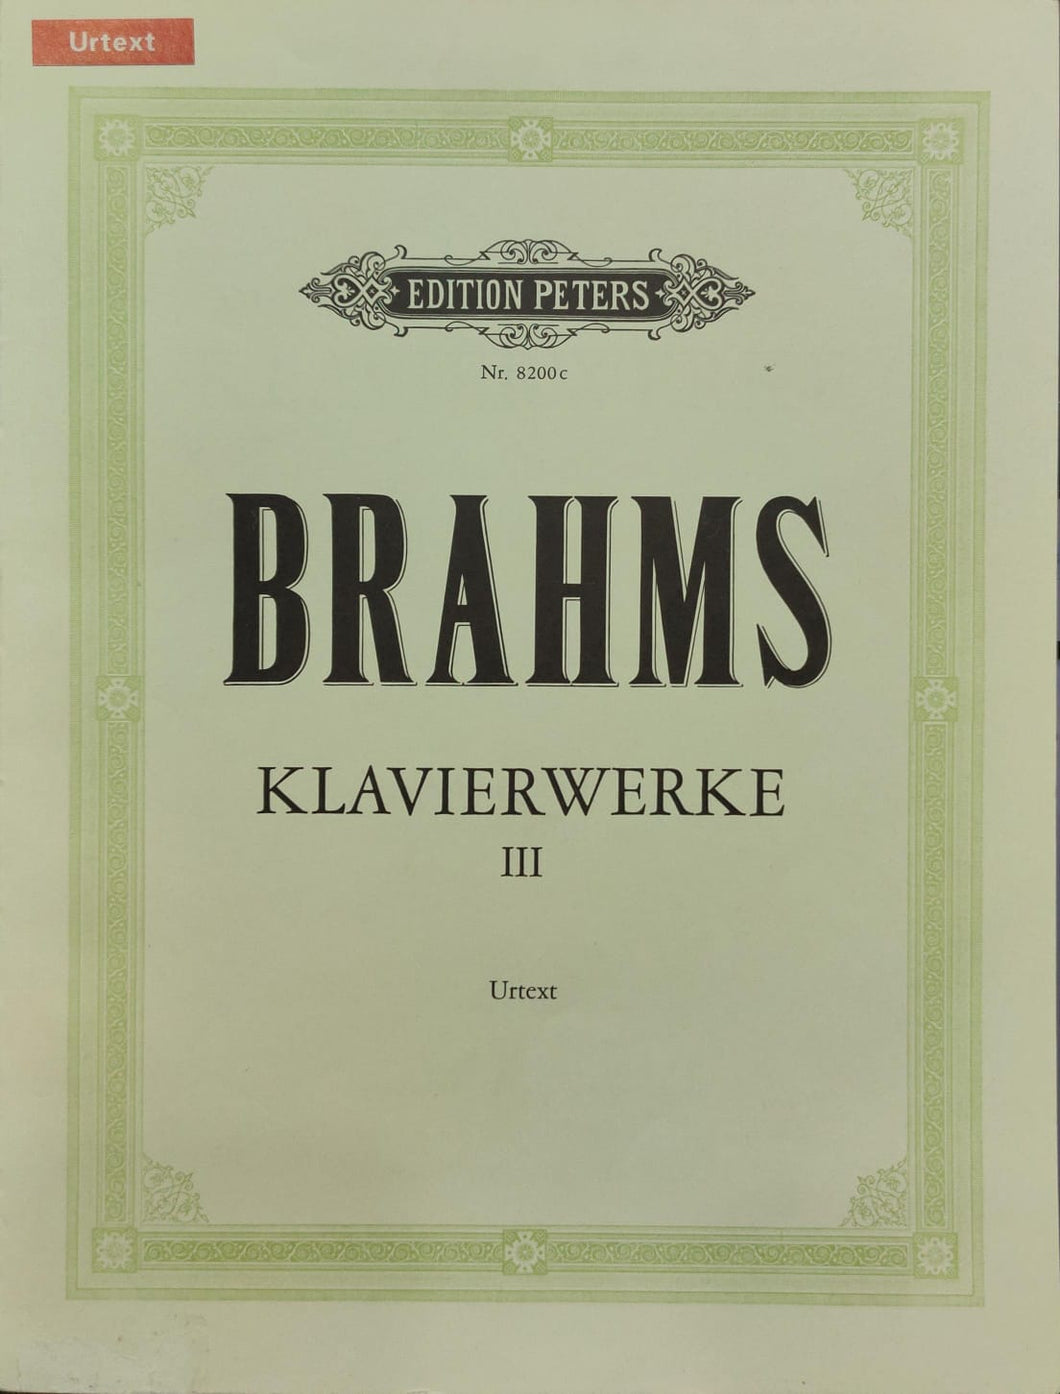 Johannes Brahms: Piano Works, Vol. 3